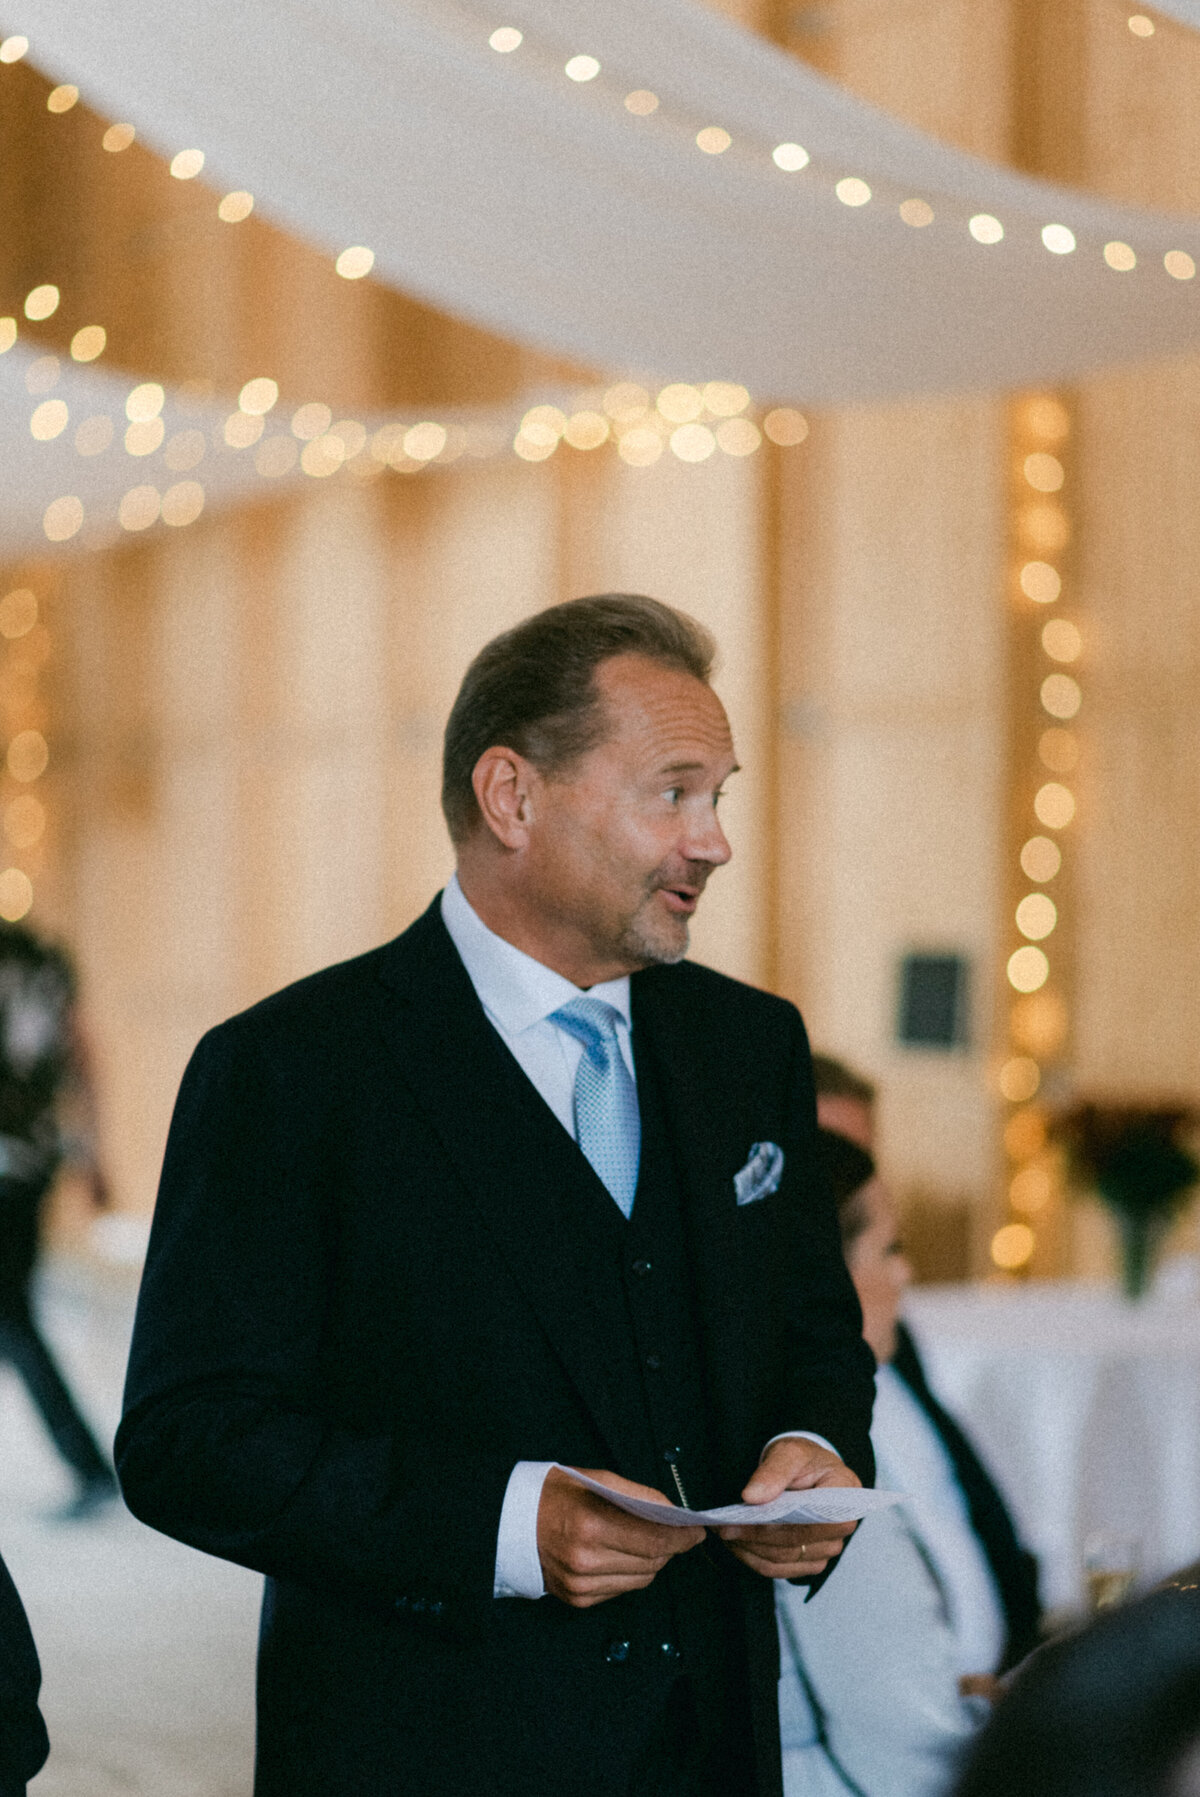 A guest giving a speech in the wedding captured by wedding photographer Hannika Gabrielsson.